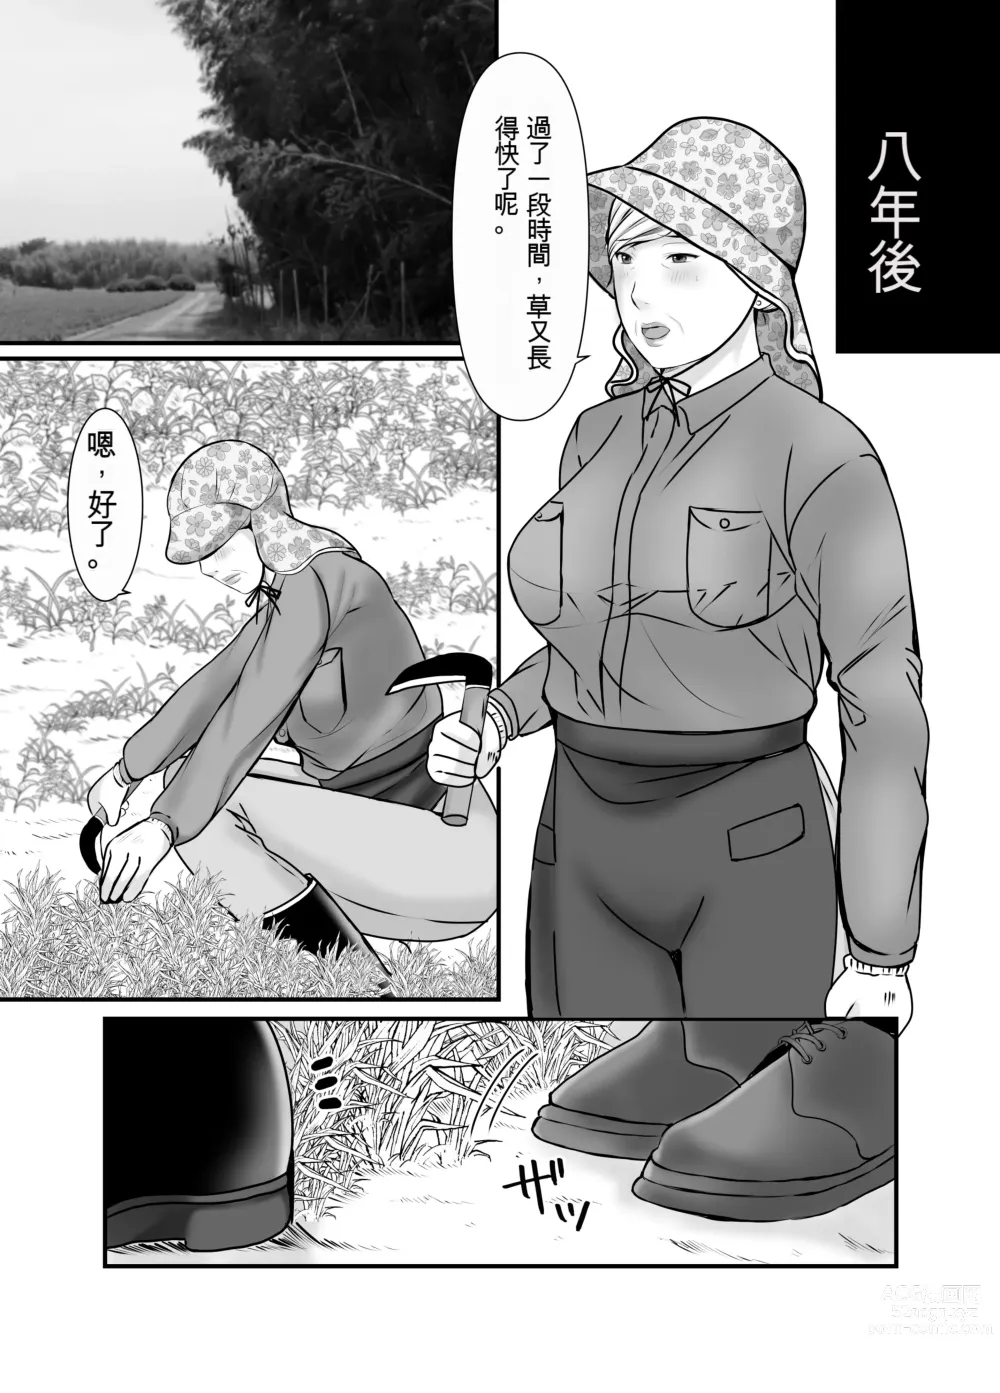 Page 56 of manga 祖母與孫子 ~孫子的第一次被內射的那一天~